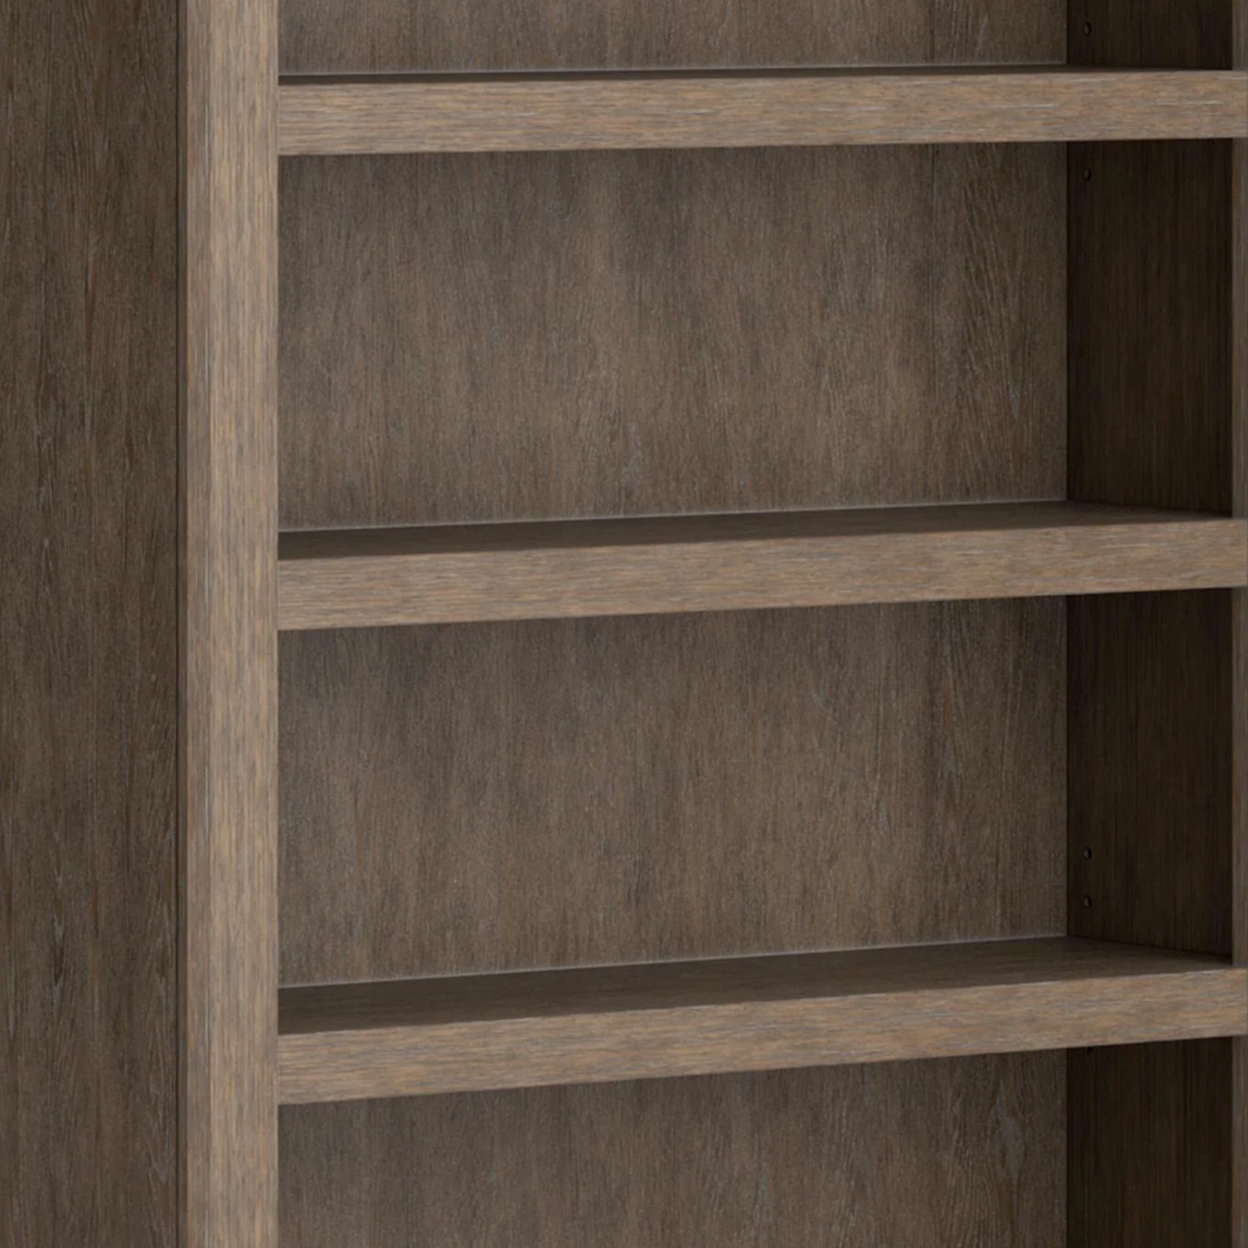 75 Inch Freestanding Bookcase, Adjustable Shelves, Wire Brushed Light Brown- Saltoro Sherpi